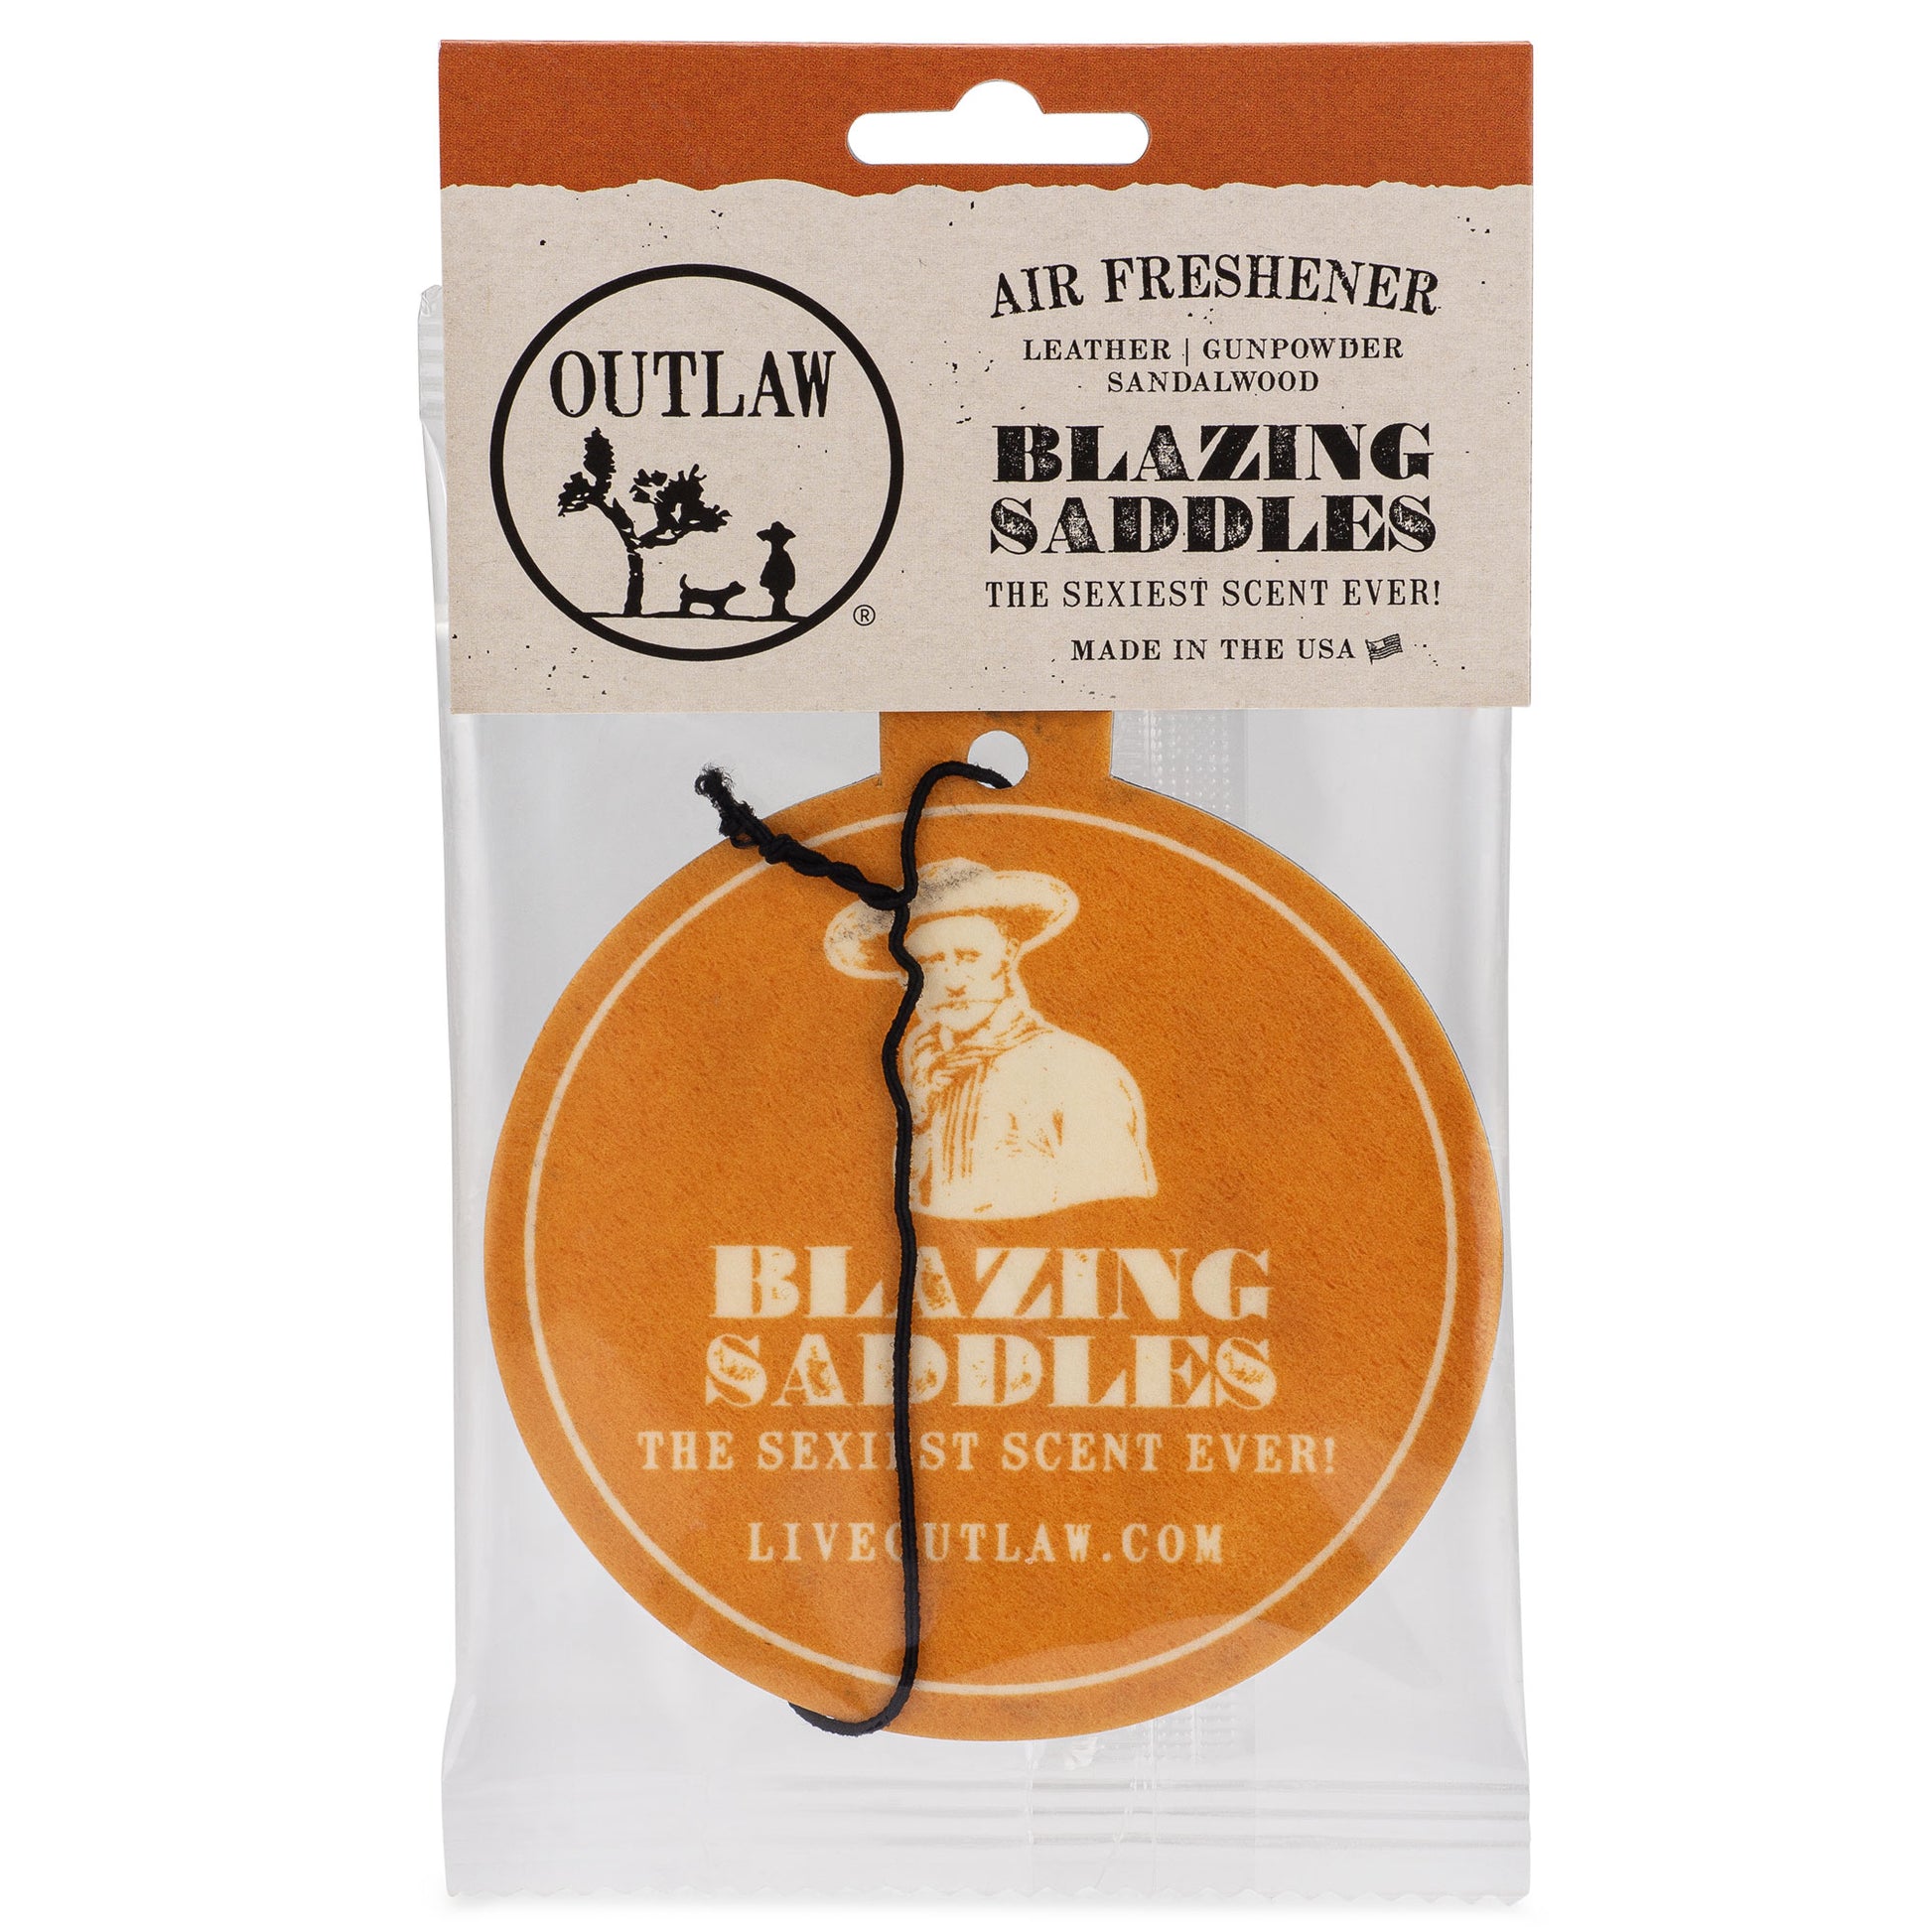 Outlaw Blazing Saddles Air Freshener